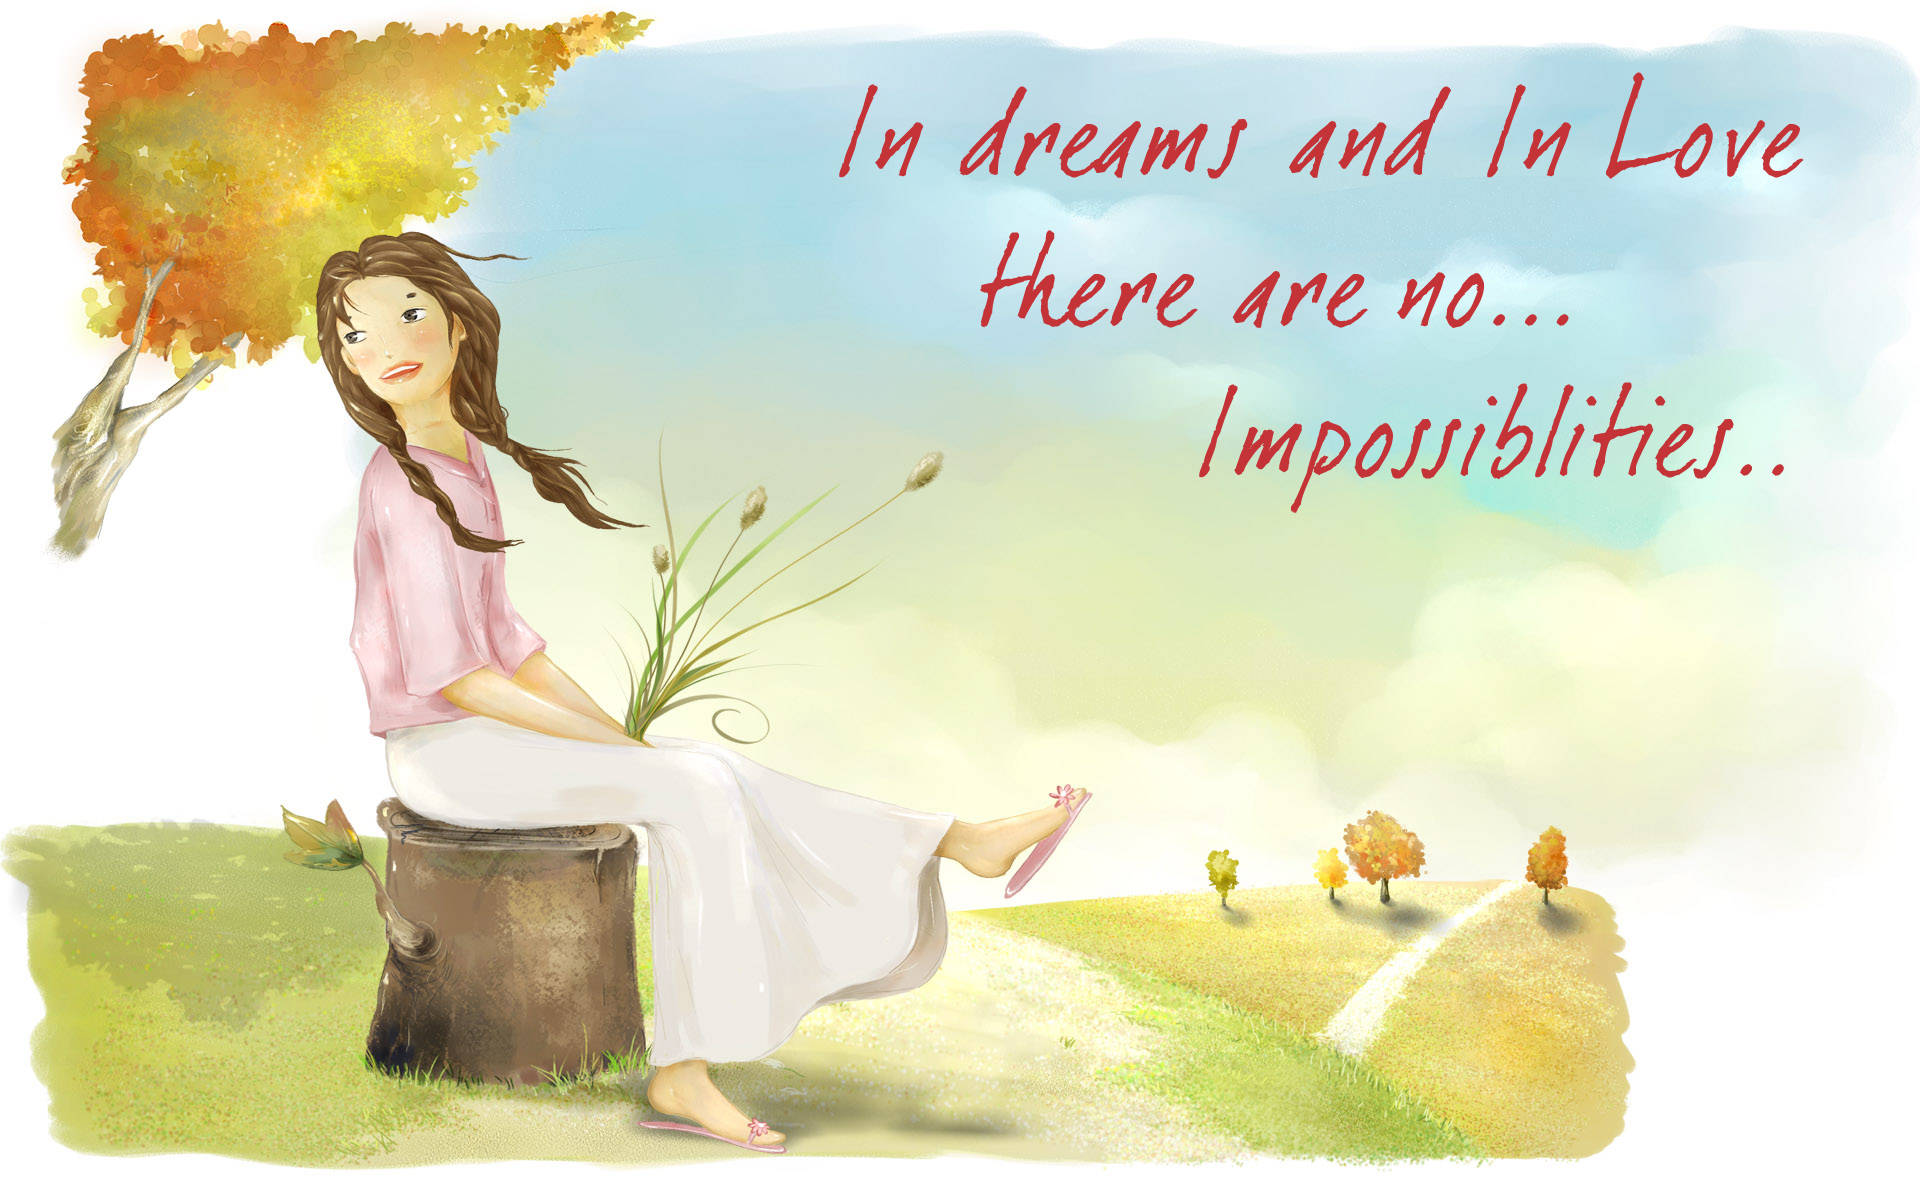 No Impossibilities Love Quotes Wallpaper